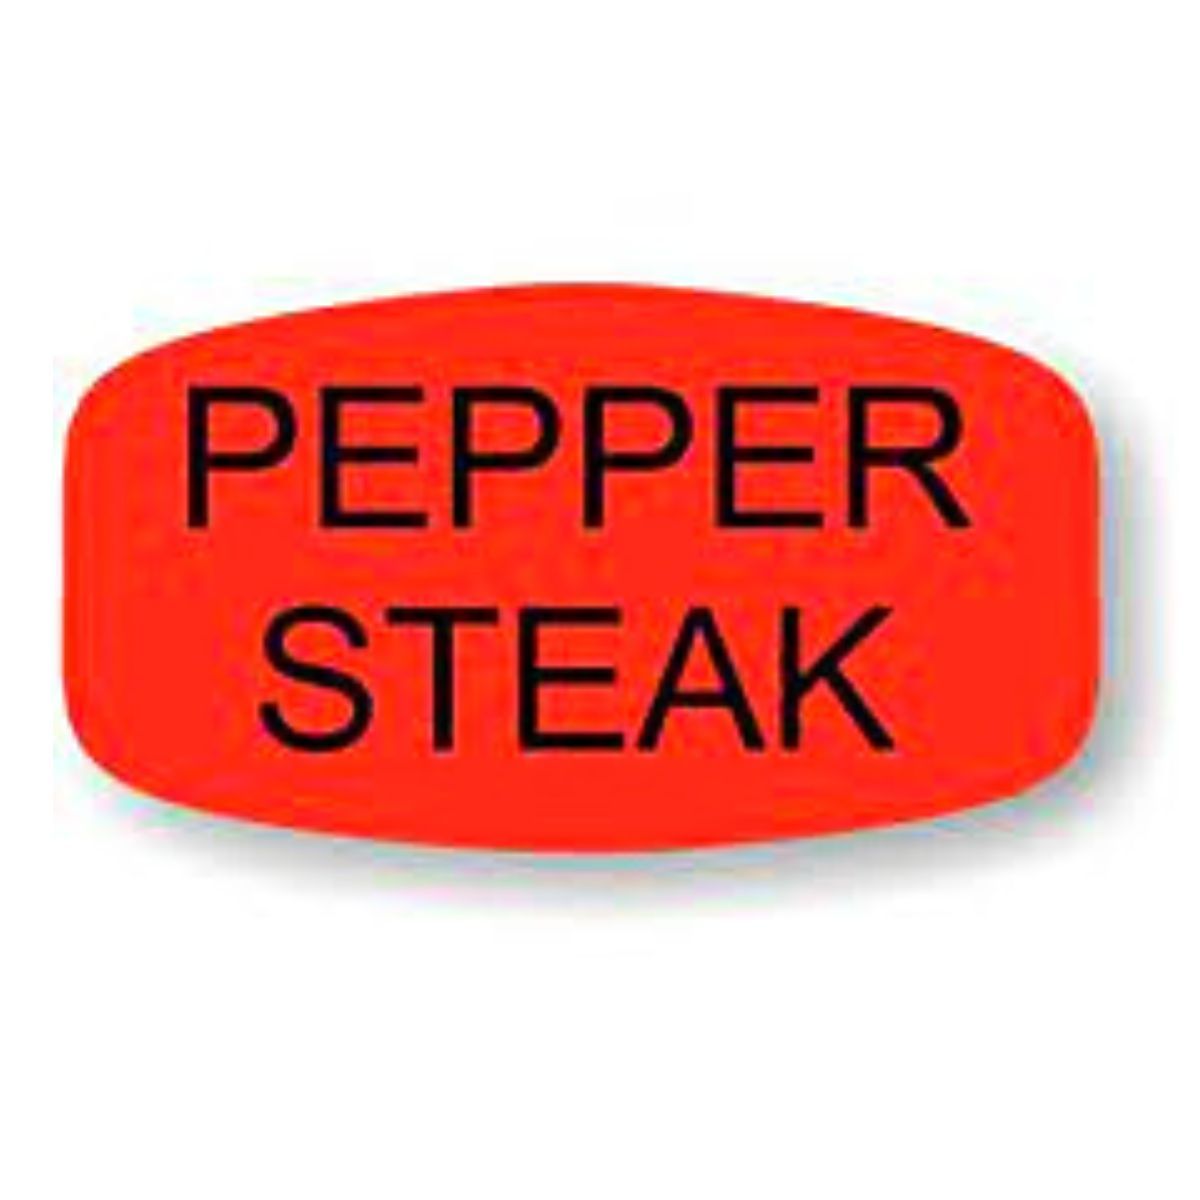 Bollin Label 12536 - Pepper Steak Black On Red Short Oval - Roll of 1000